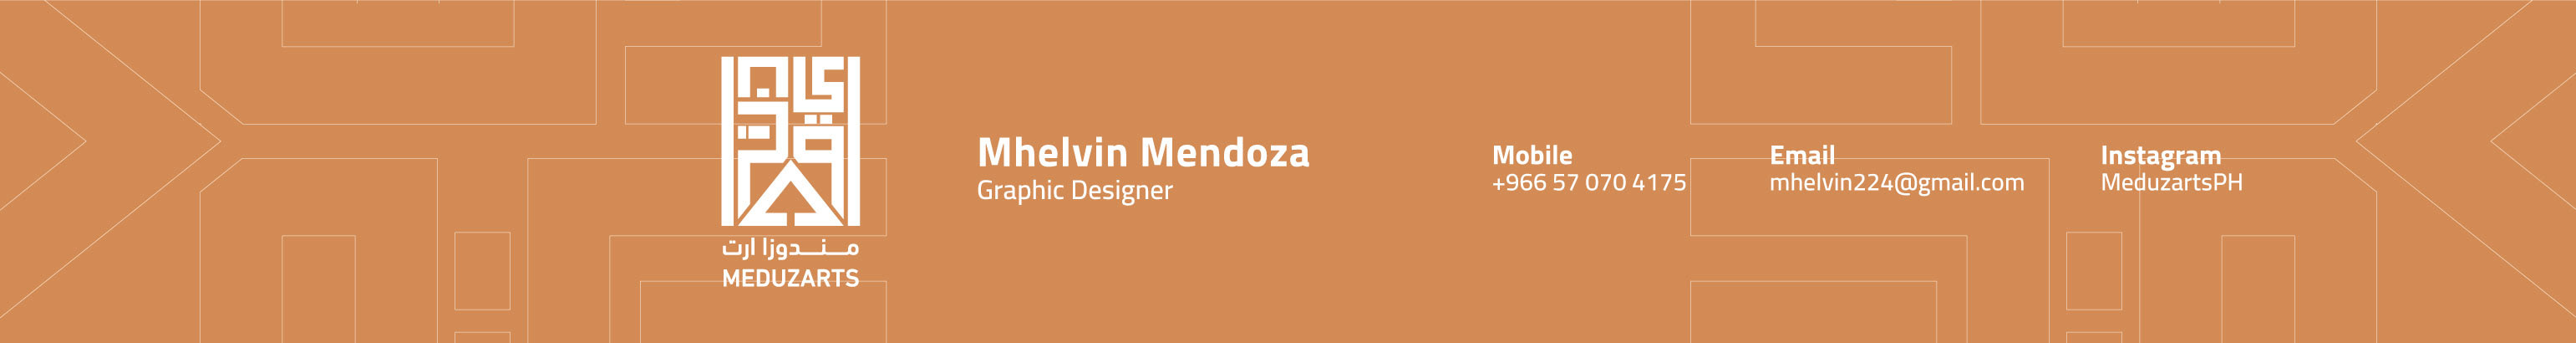 Баннер профиля Mhelvin Mendoza